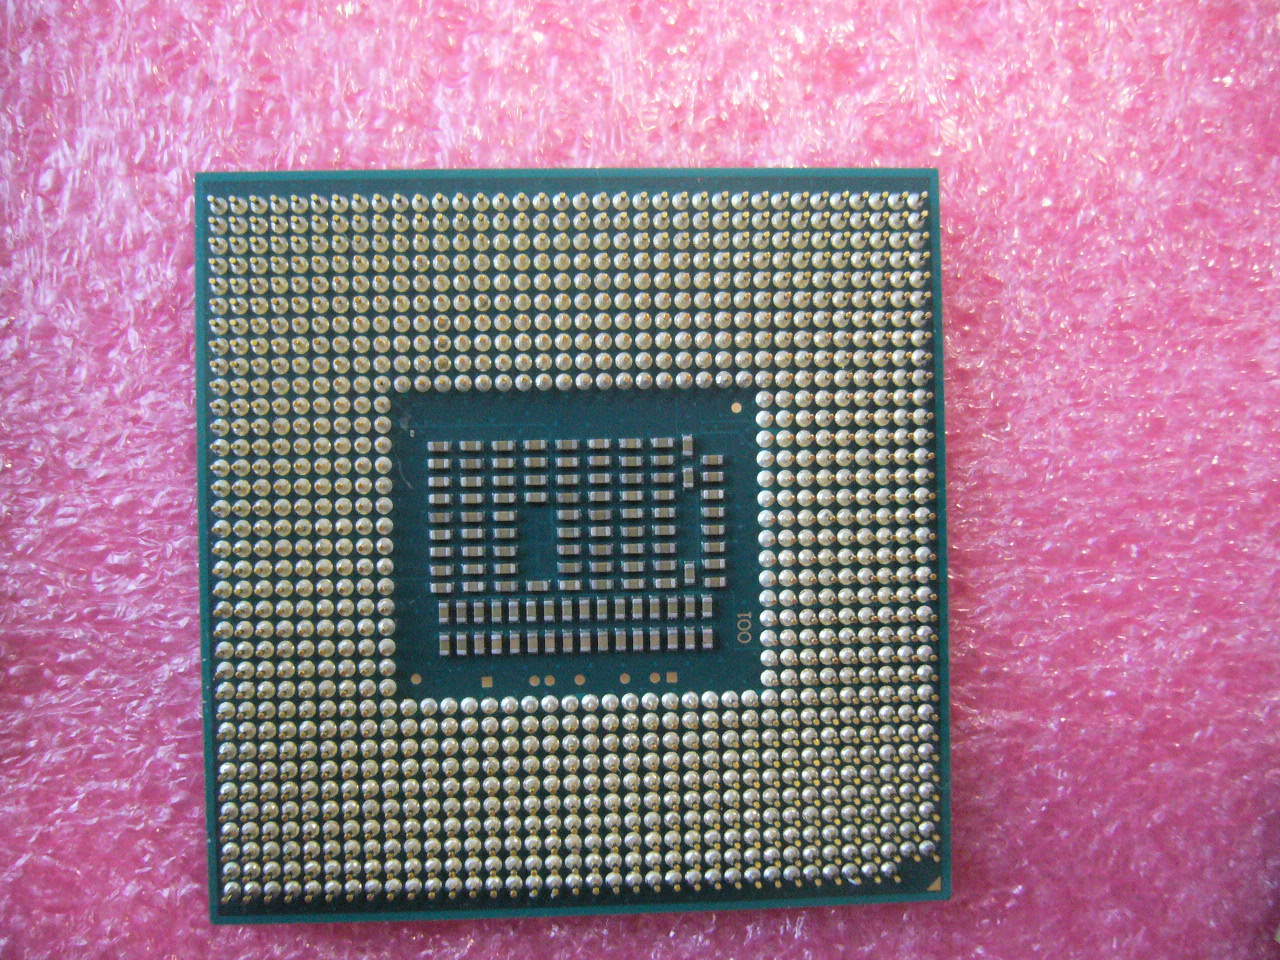 QTY 1x Intel CPU i5-3320M Dual-Core 2.6 Ghz PGA988 SR0MX Socket G2 04W4137 - zum Schließen ins Bild klicken